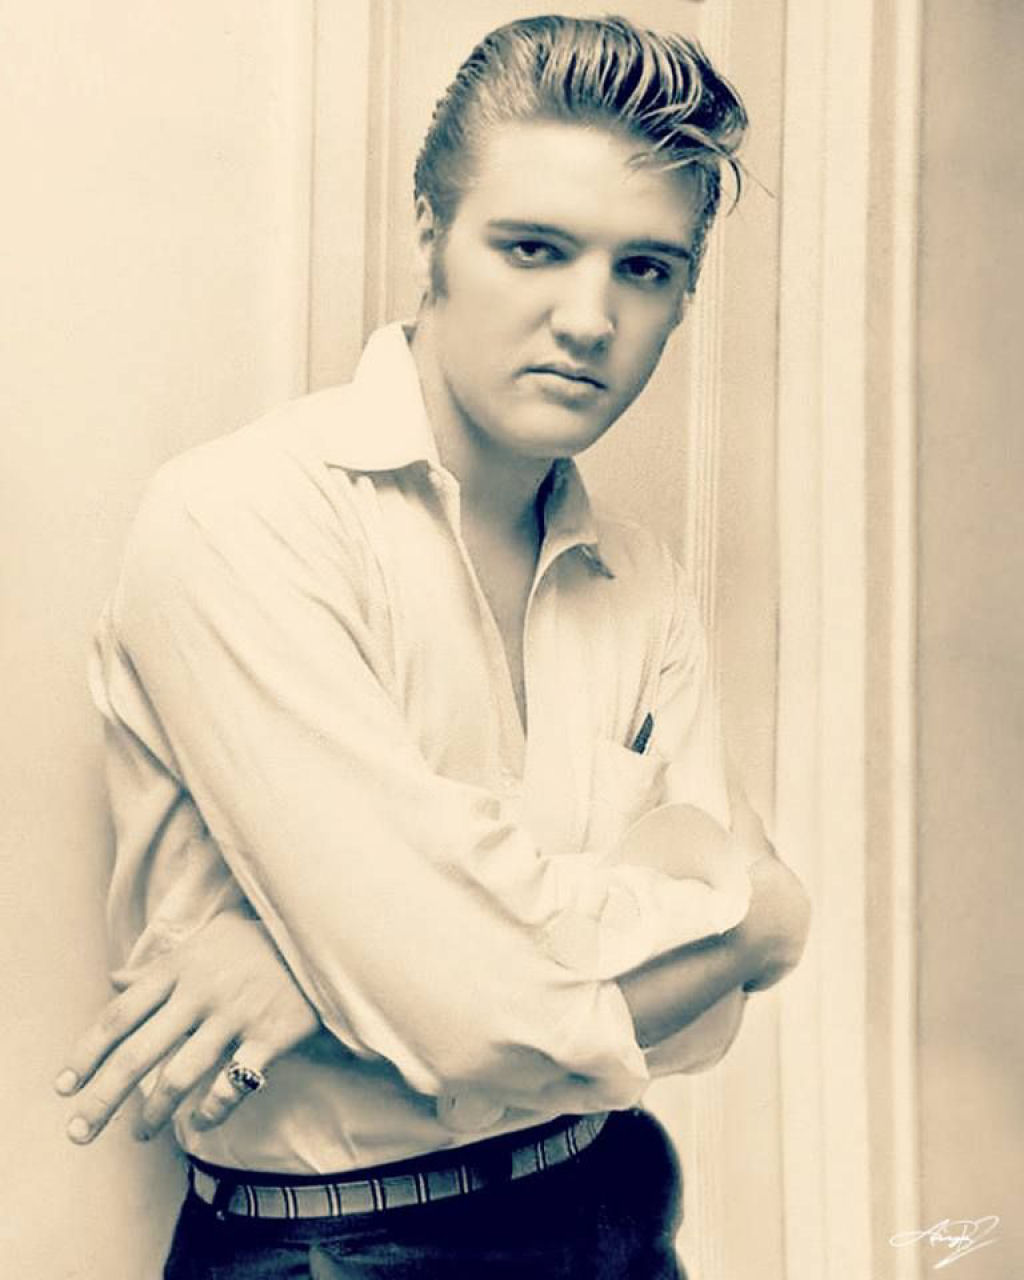 Fotos antigas de Elvis Presley mostram que ele era realmente loiro 09